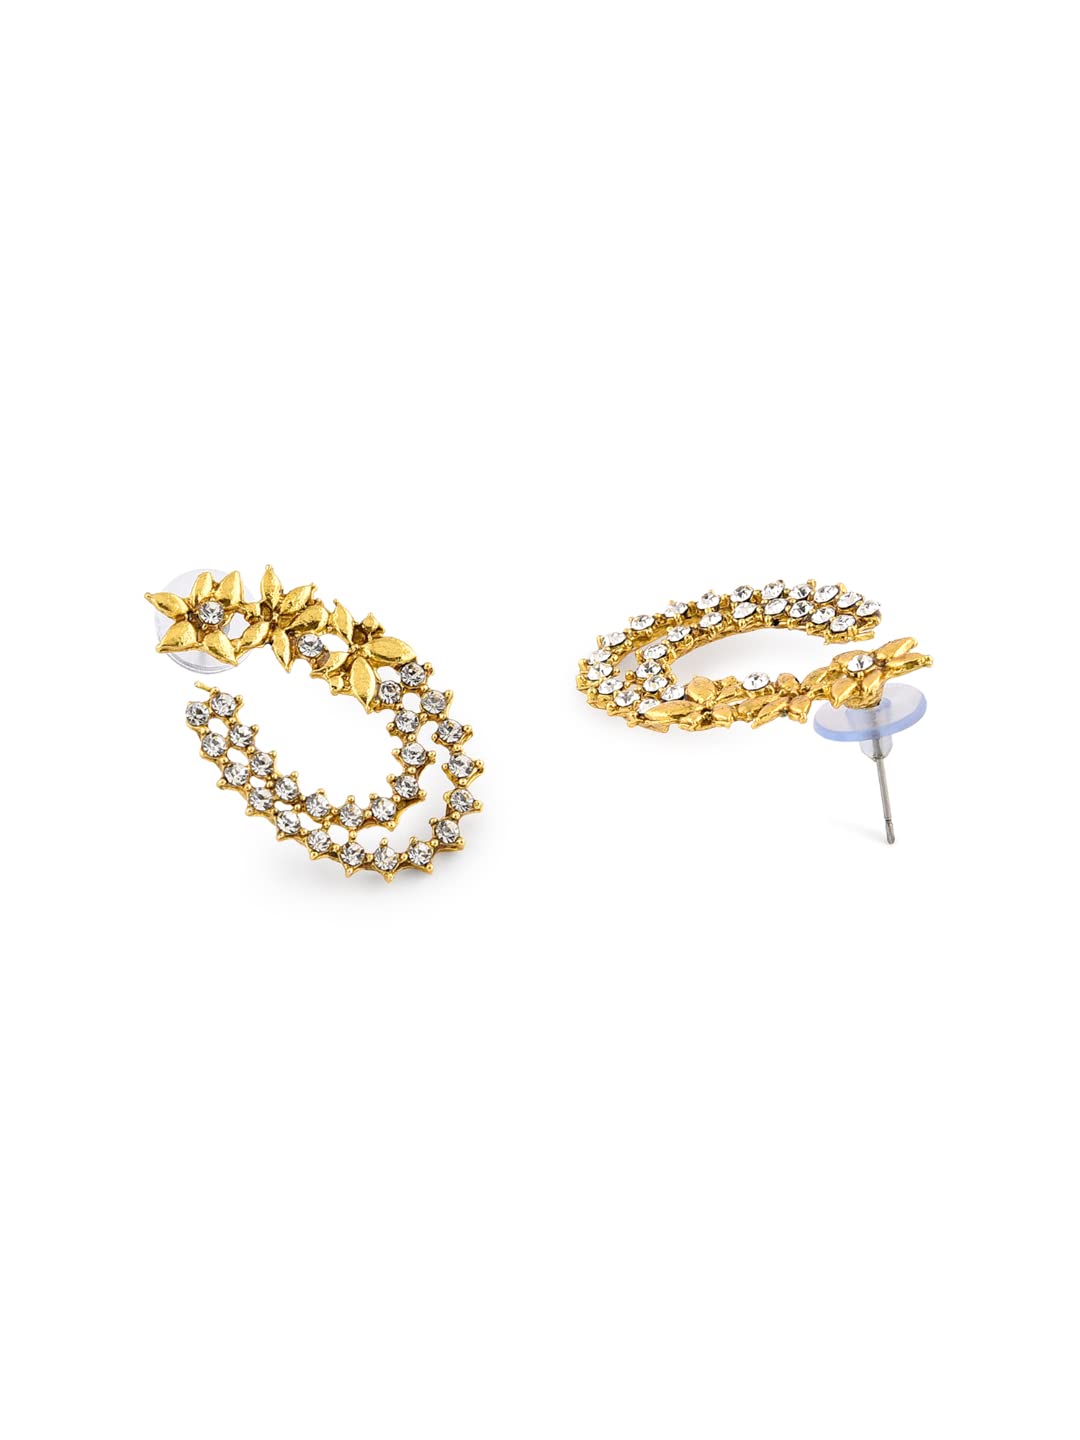 ZAVERI PEARLS Women's 22K Antique Gold Plated Metal Tone Floral Design Stud Earring (ZPFK8055)